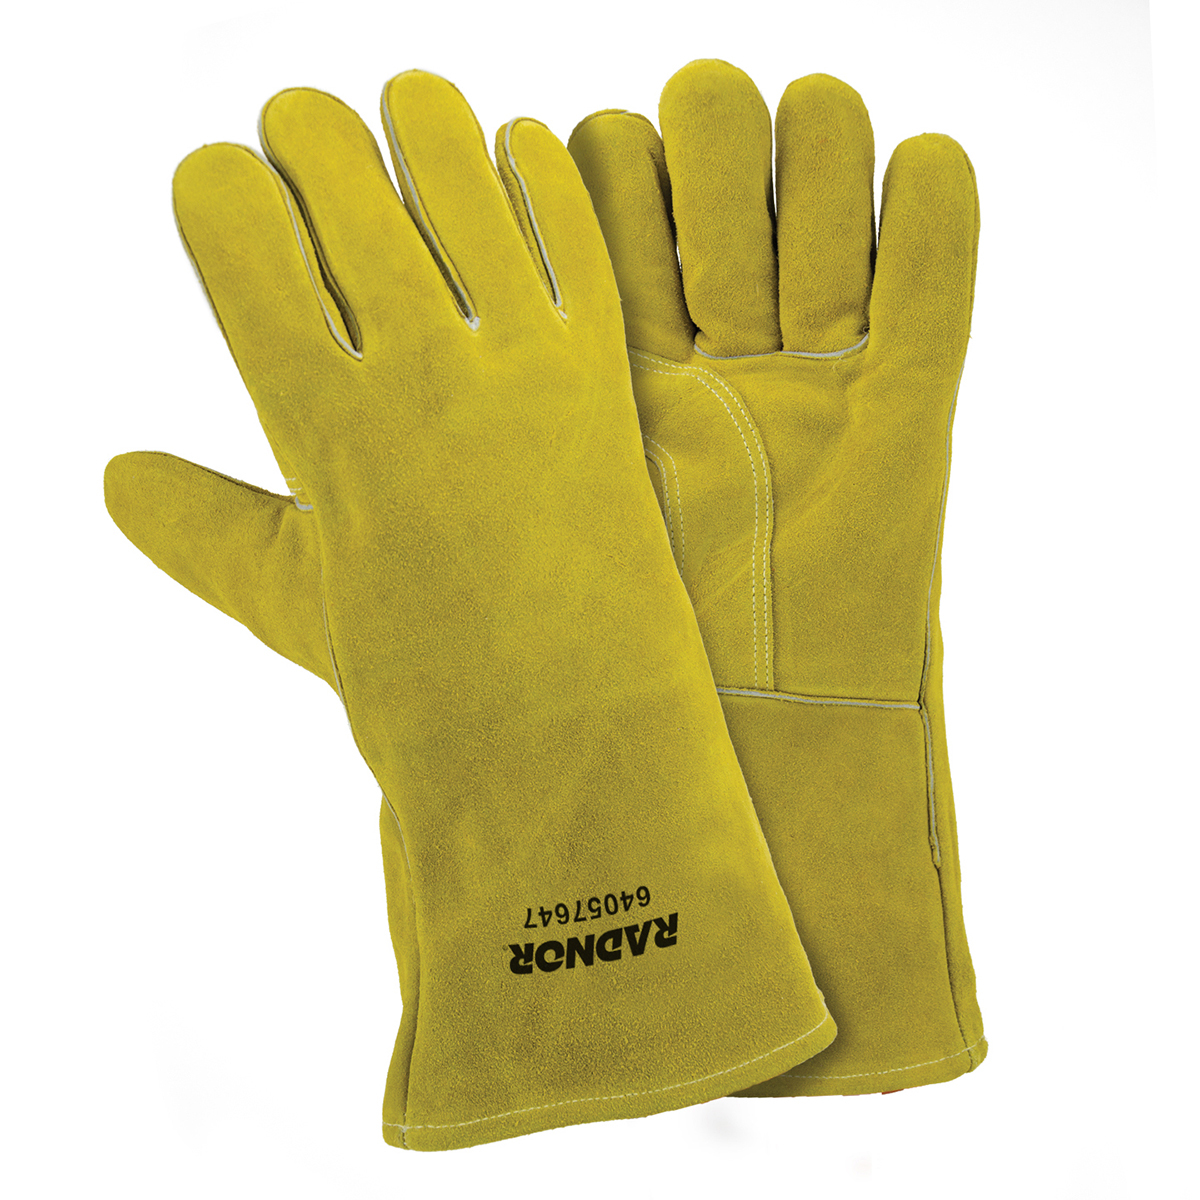 RADNOR Large 14 Blue Slightly Select Shoulder Split Cowhide Cotton/Foam Lined Stick Welders Gloves 2 Pairs